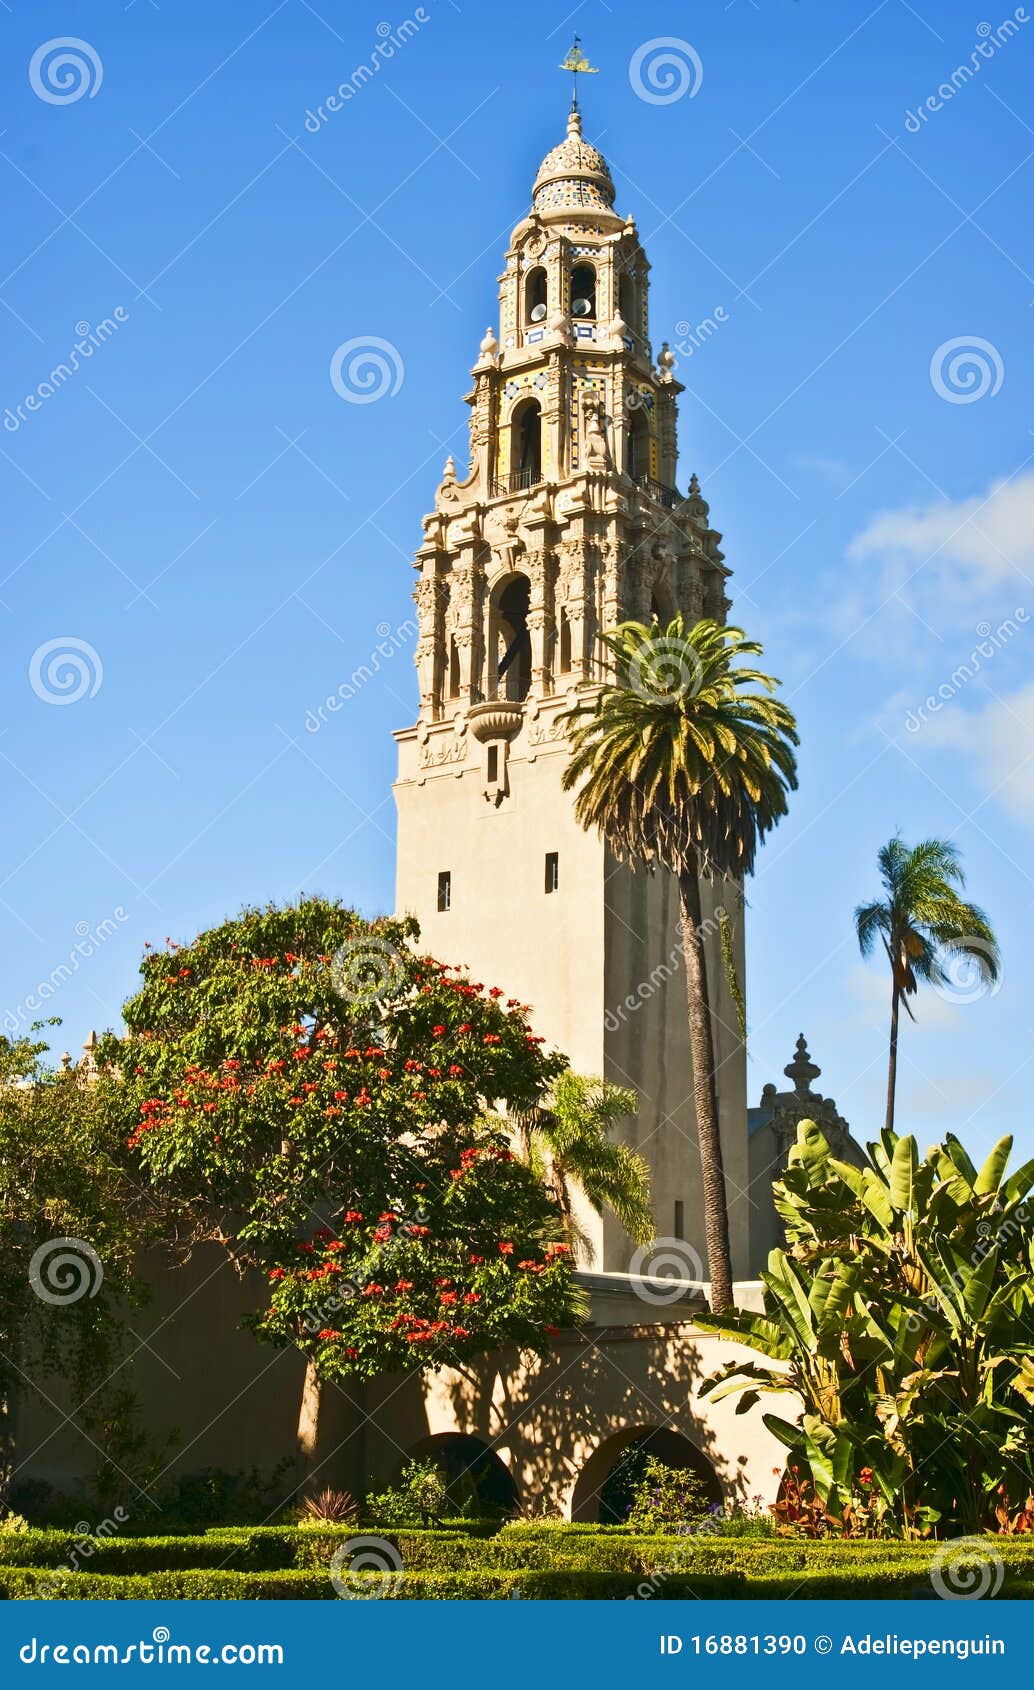 california tower, balboa park, san diego